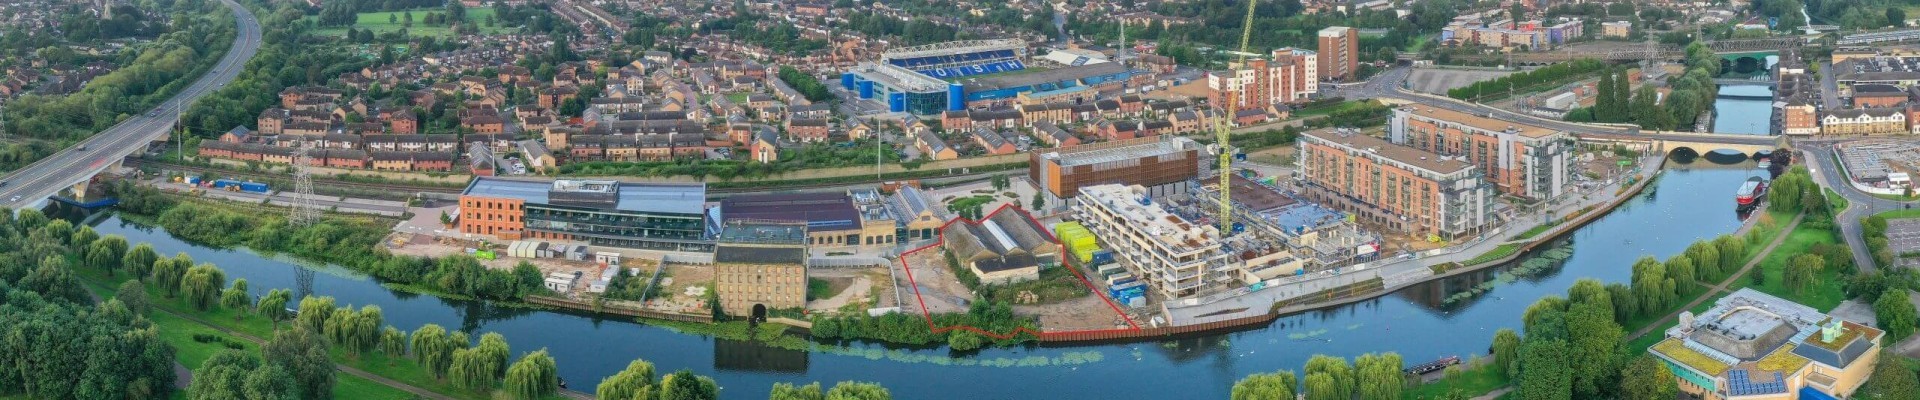 FQ4 development opportunity Eddisons inc BSM Peterborough March 2021 scaled